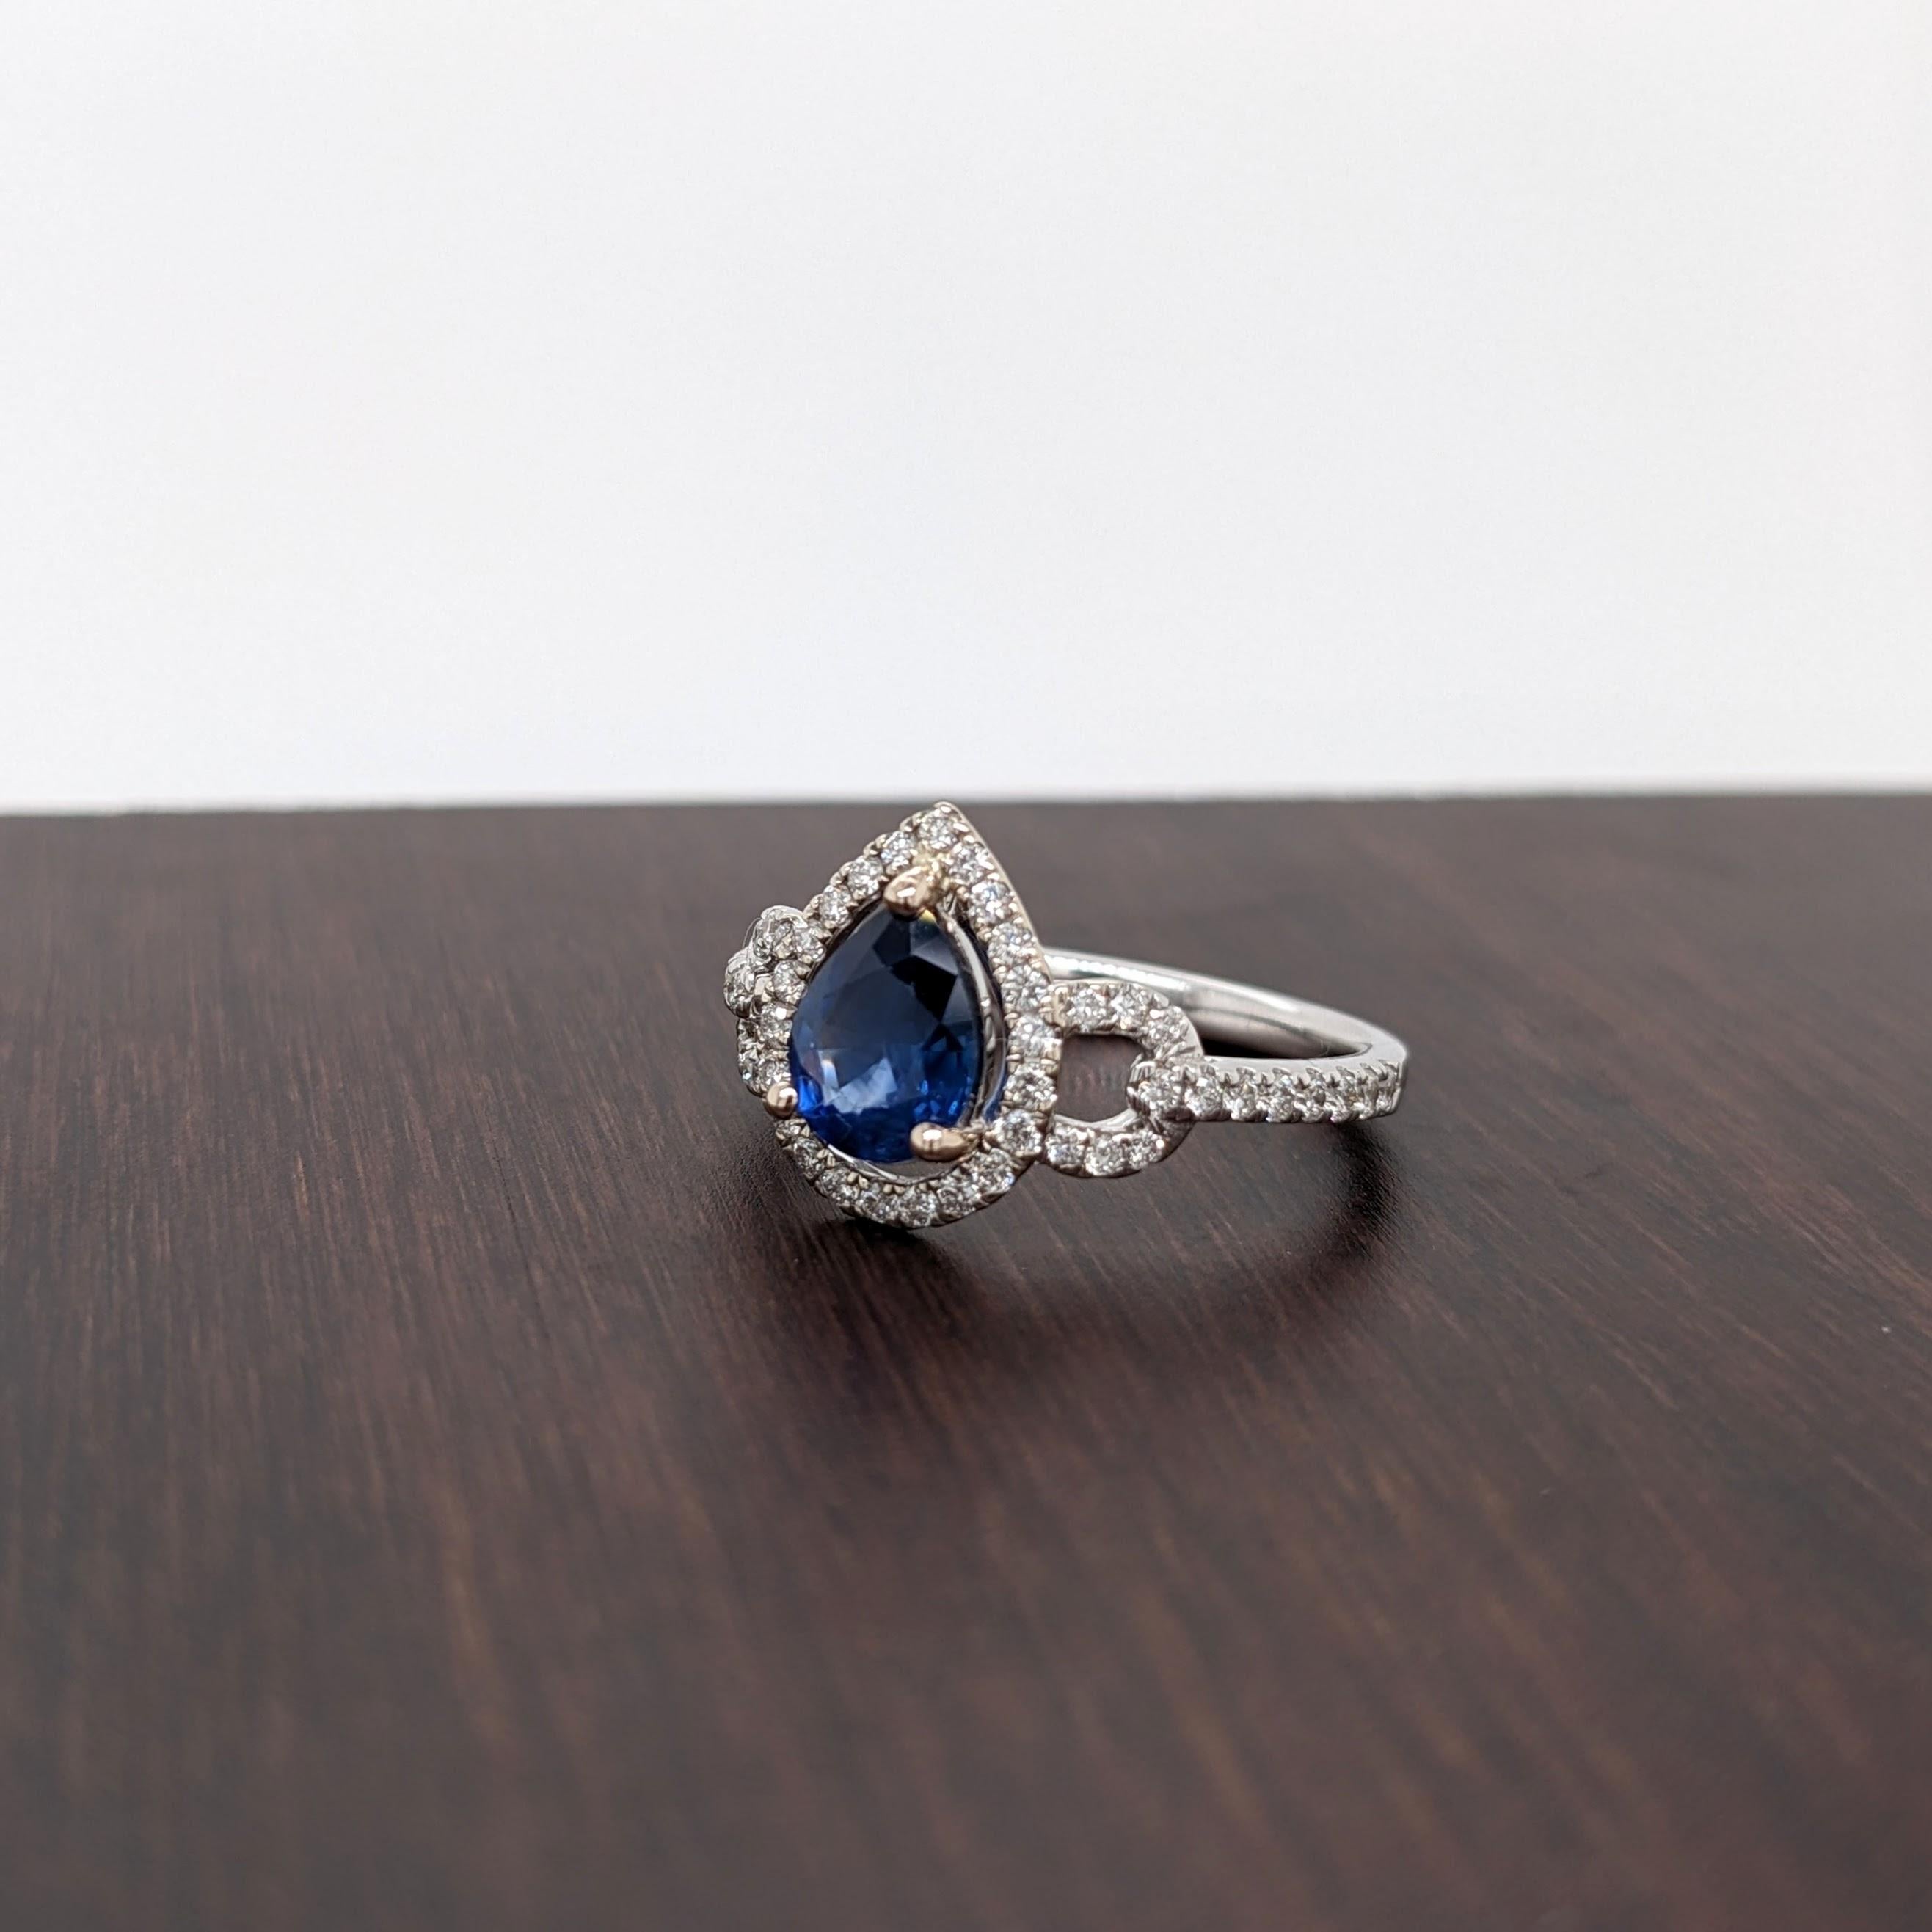 Modernist 1.14ct Ceylon Sapphire Ring w Diamond Halo in Solid 14k White Gold Pear 8x6mm